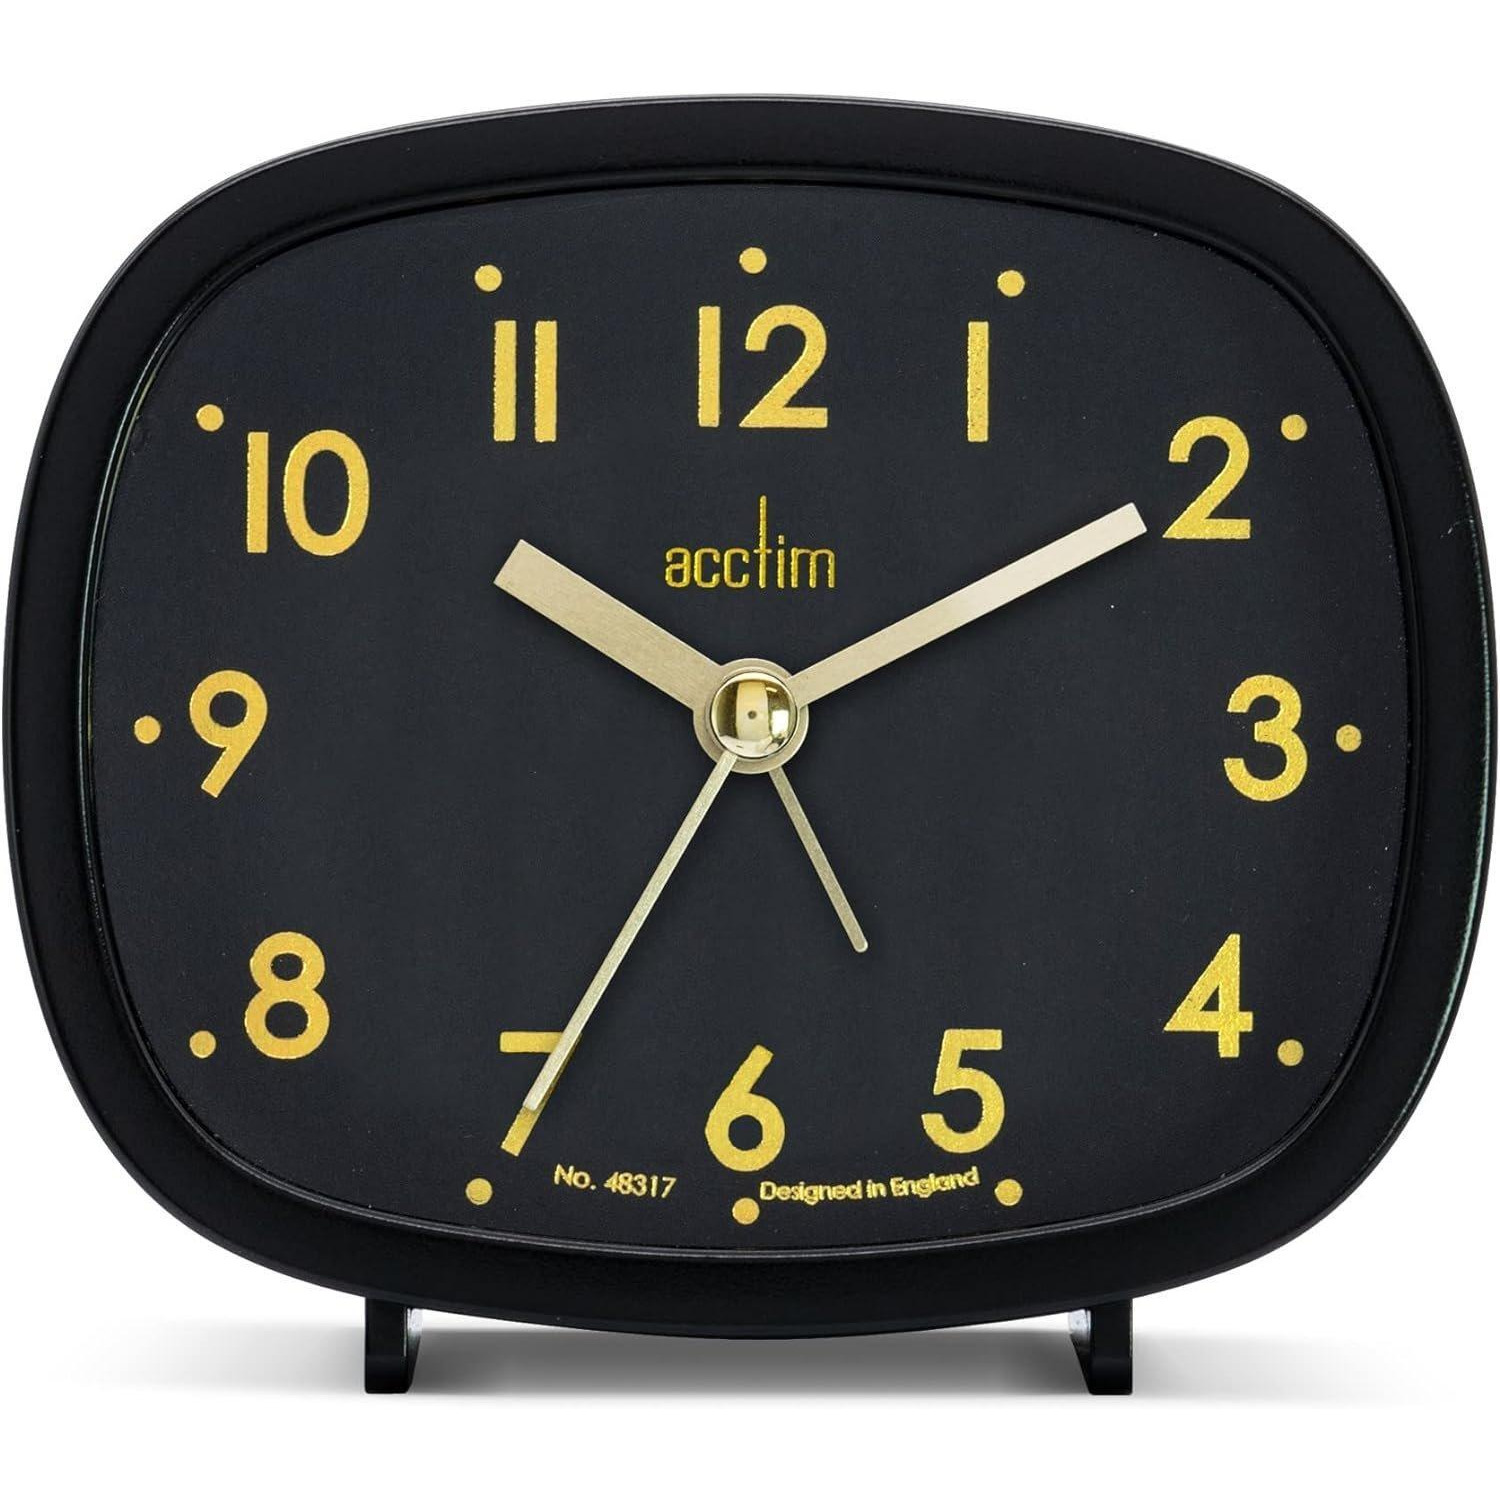 Hilda Analogue Alarm Clock Non Ticking Sweep Crescendo Alarm with Backlight - image 1